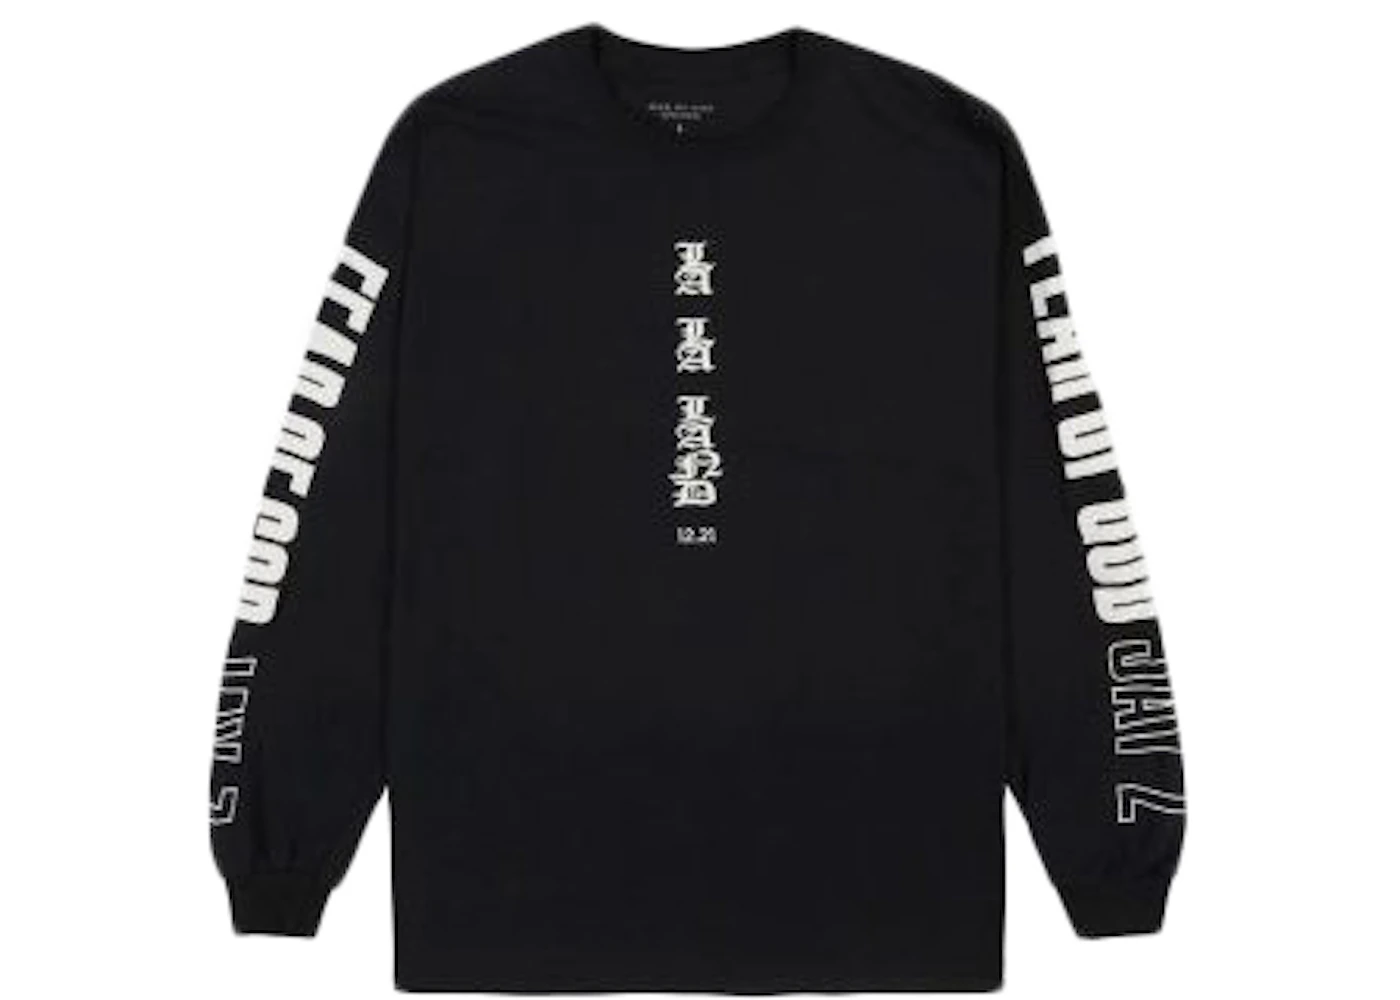 FEAR OF GOD Jay-Z Longsleeve T-shirt Black Men's - Fifth Collection - US